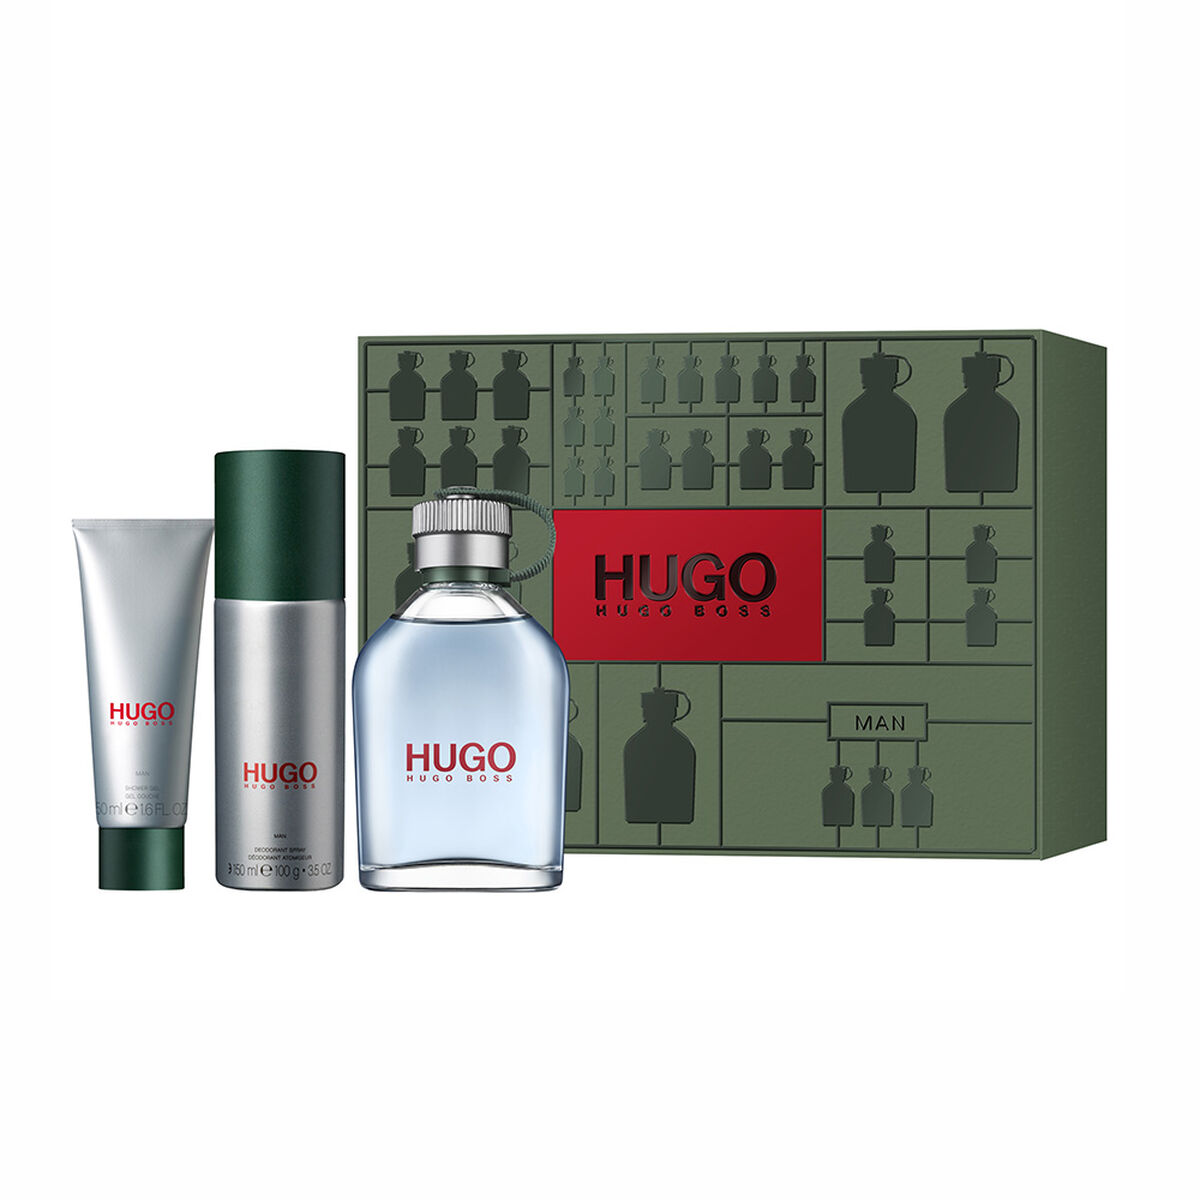 Hugo Man EDT 125 ml + Deodorant Spray 150 ml + Shower Gel 50 ml